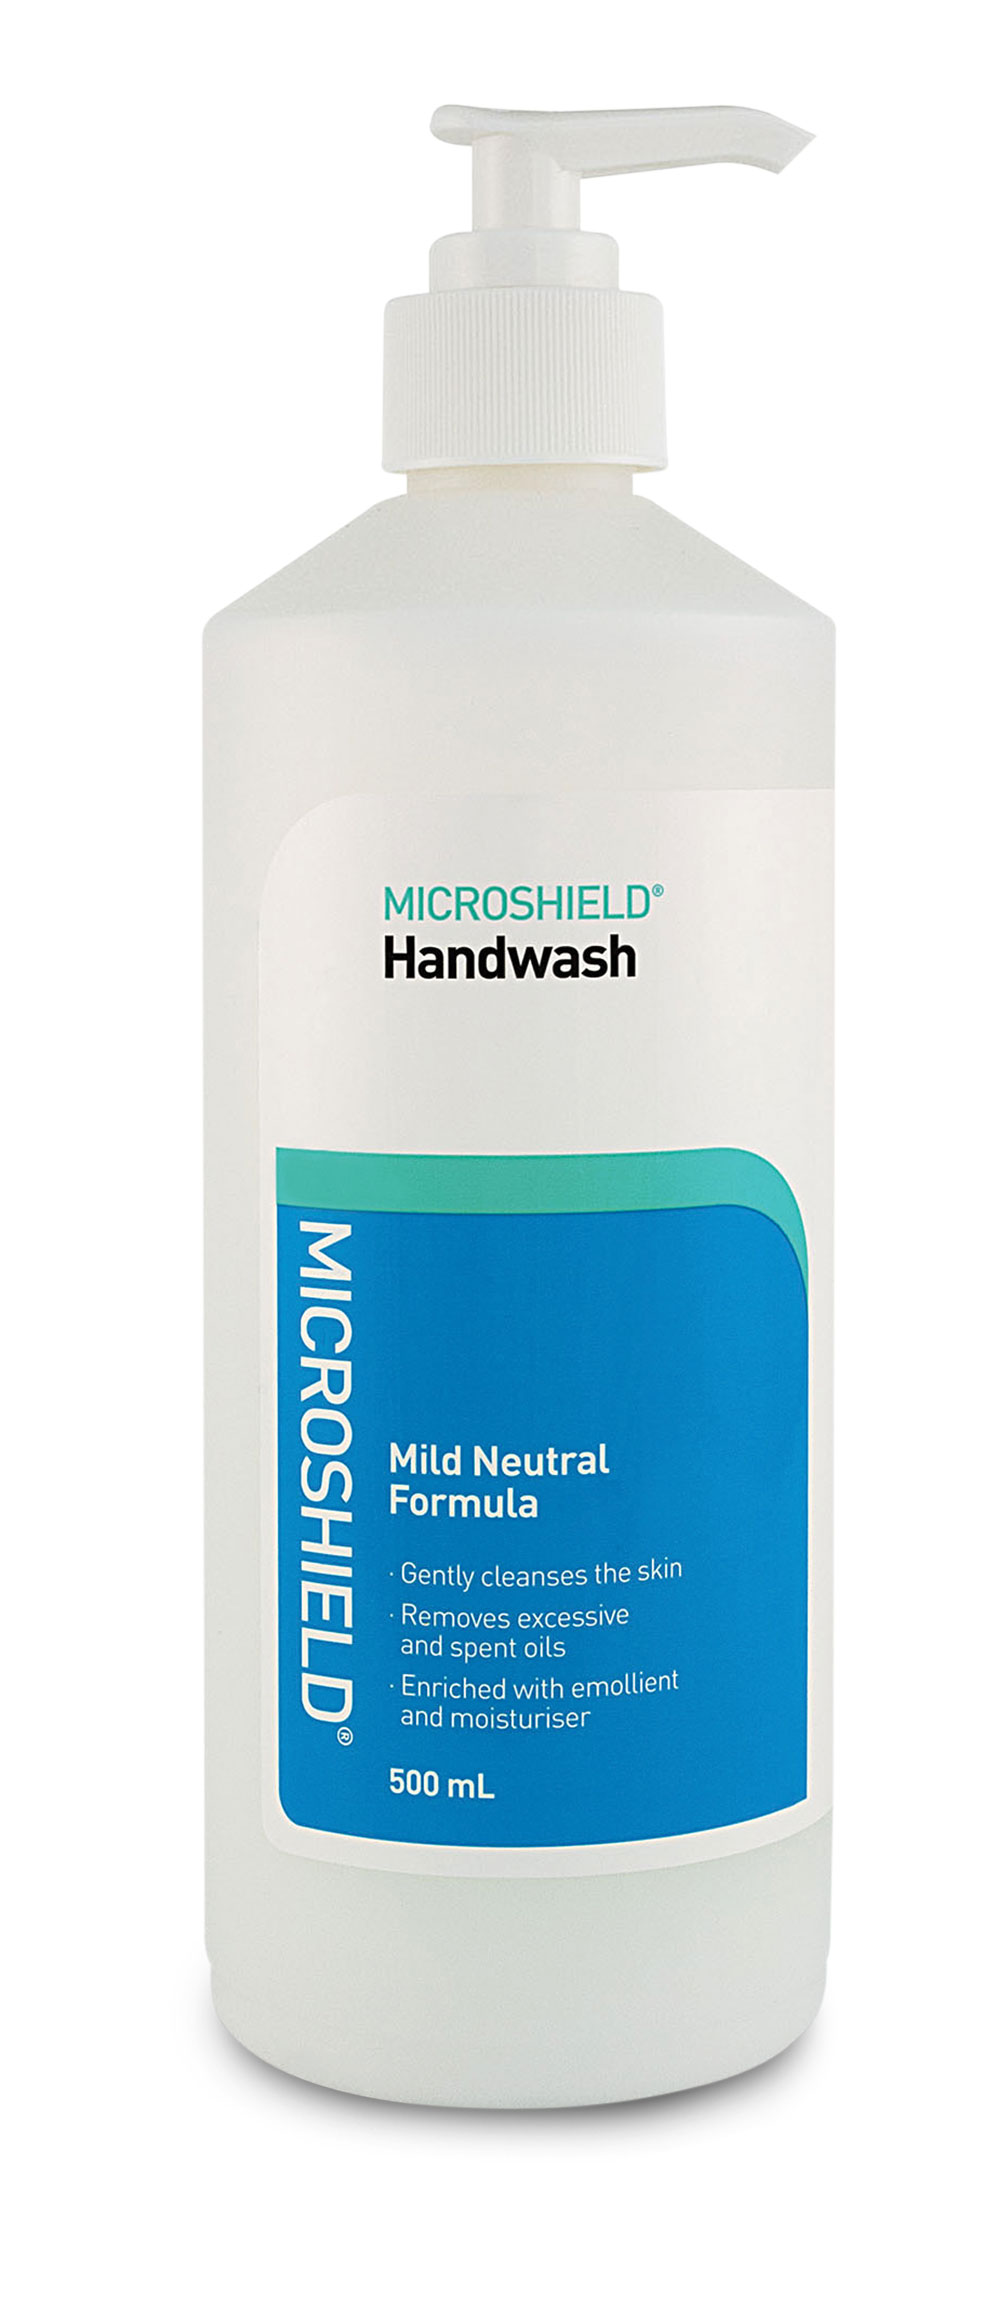 Microshield Handwash White Mild Neutral Formula